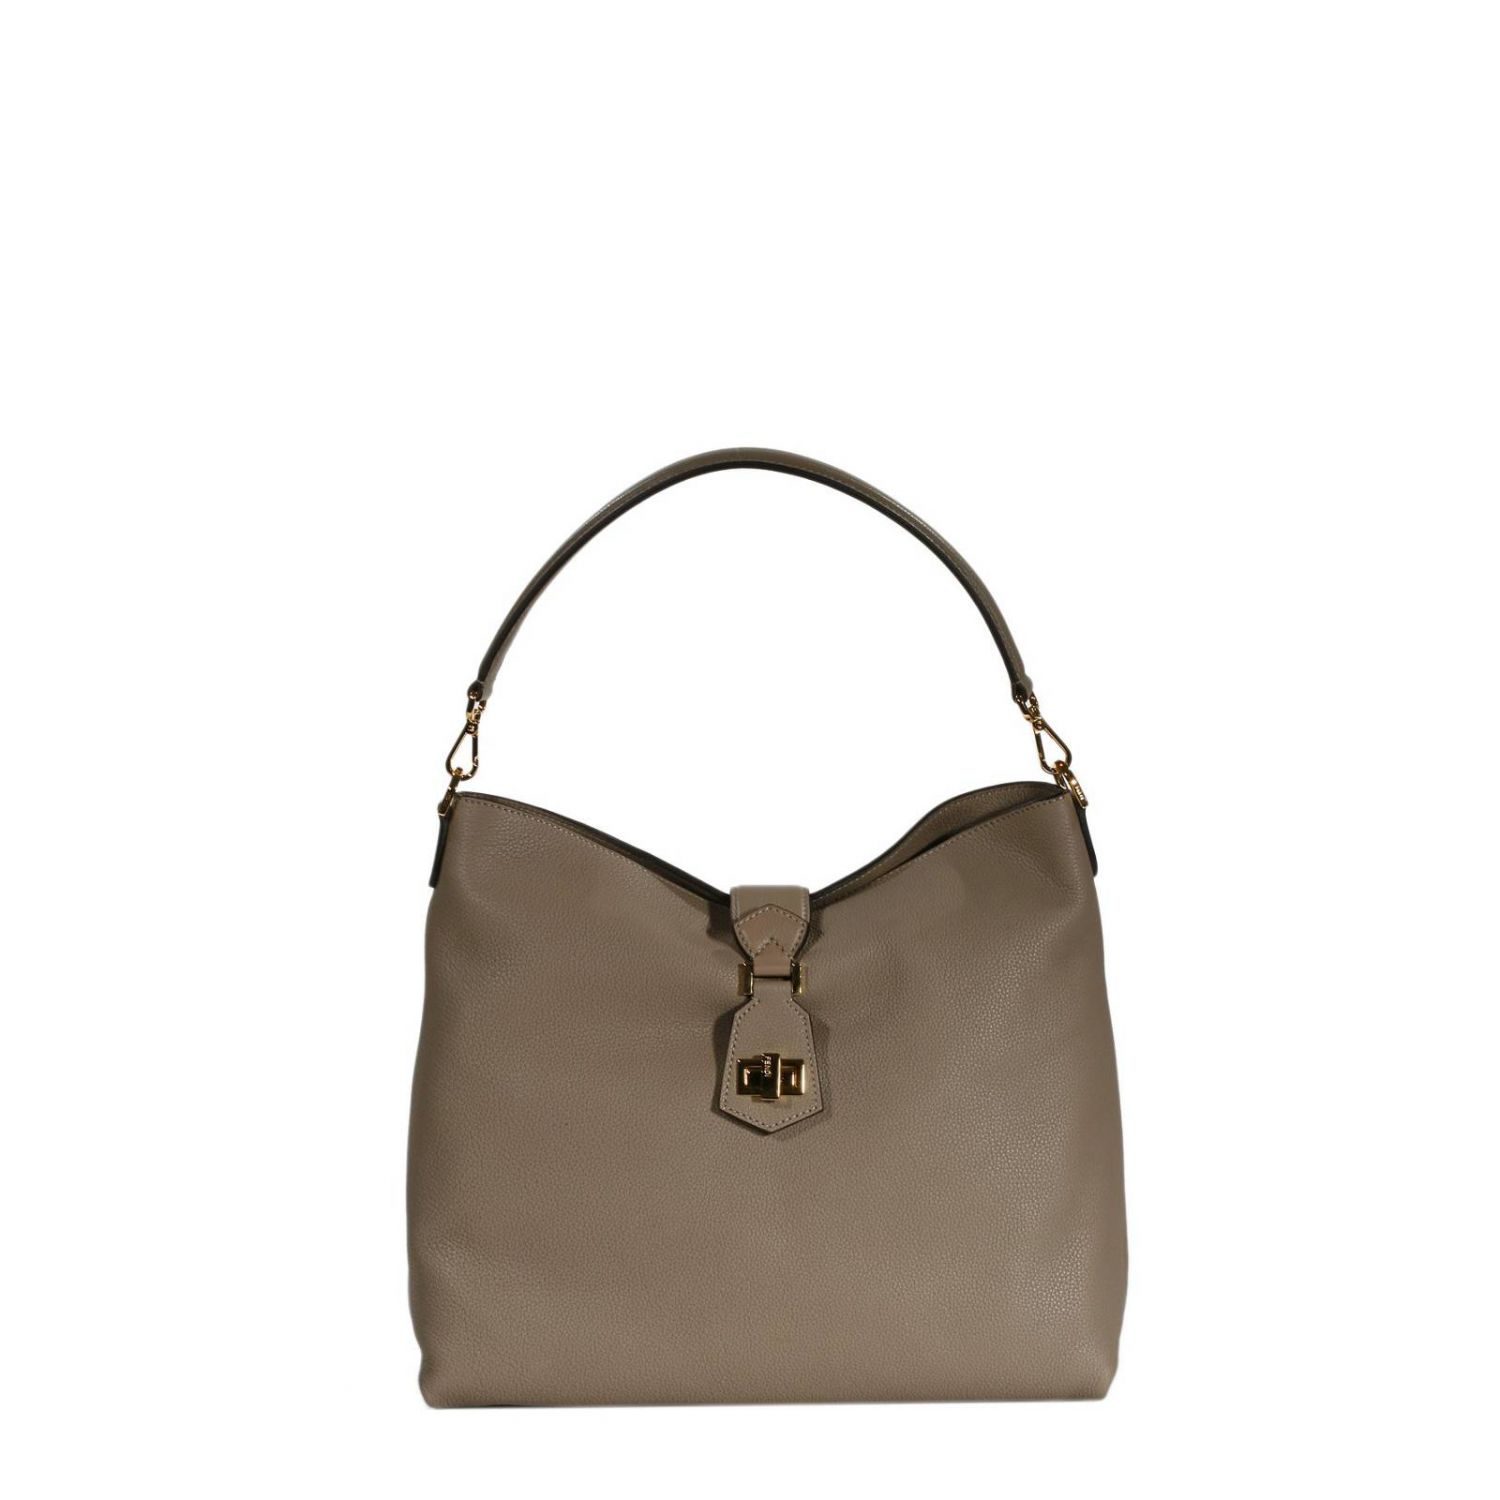 Fendi Handbag Fashion Leather Hobo in Gray (Dove grey) | Lyst